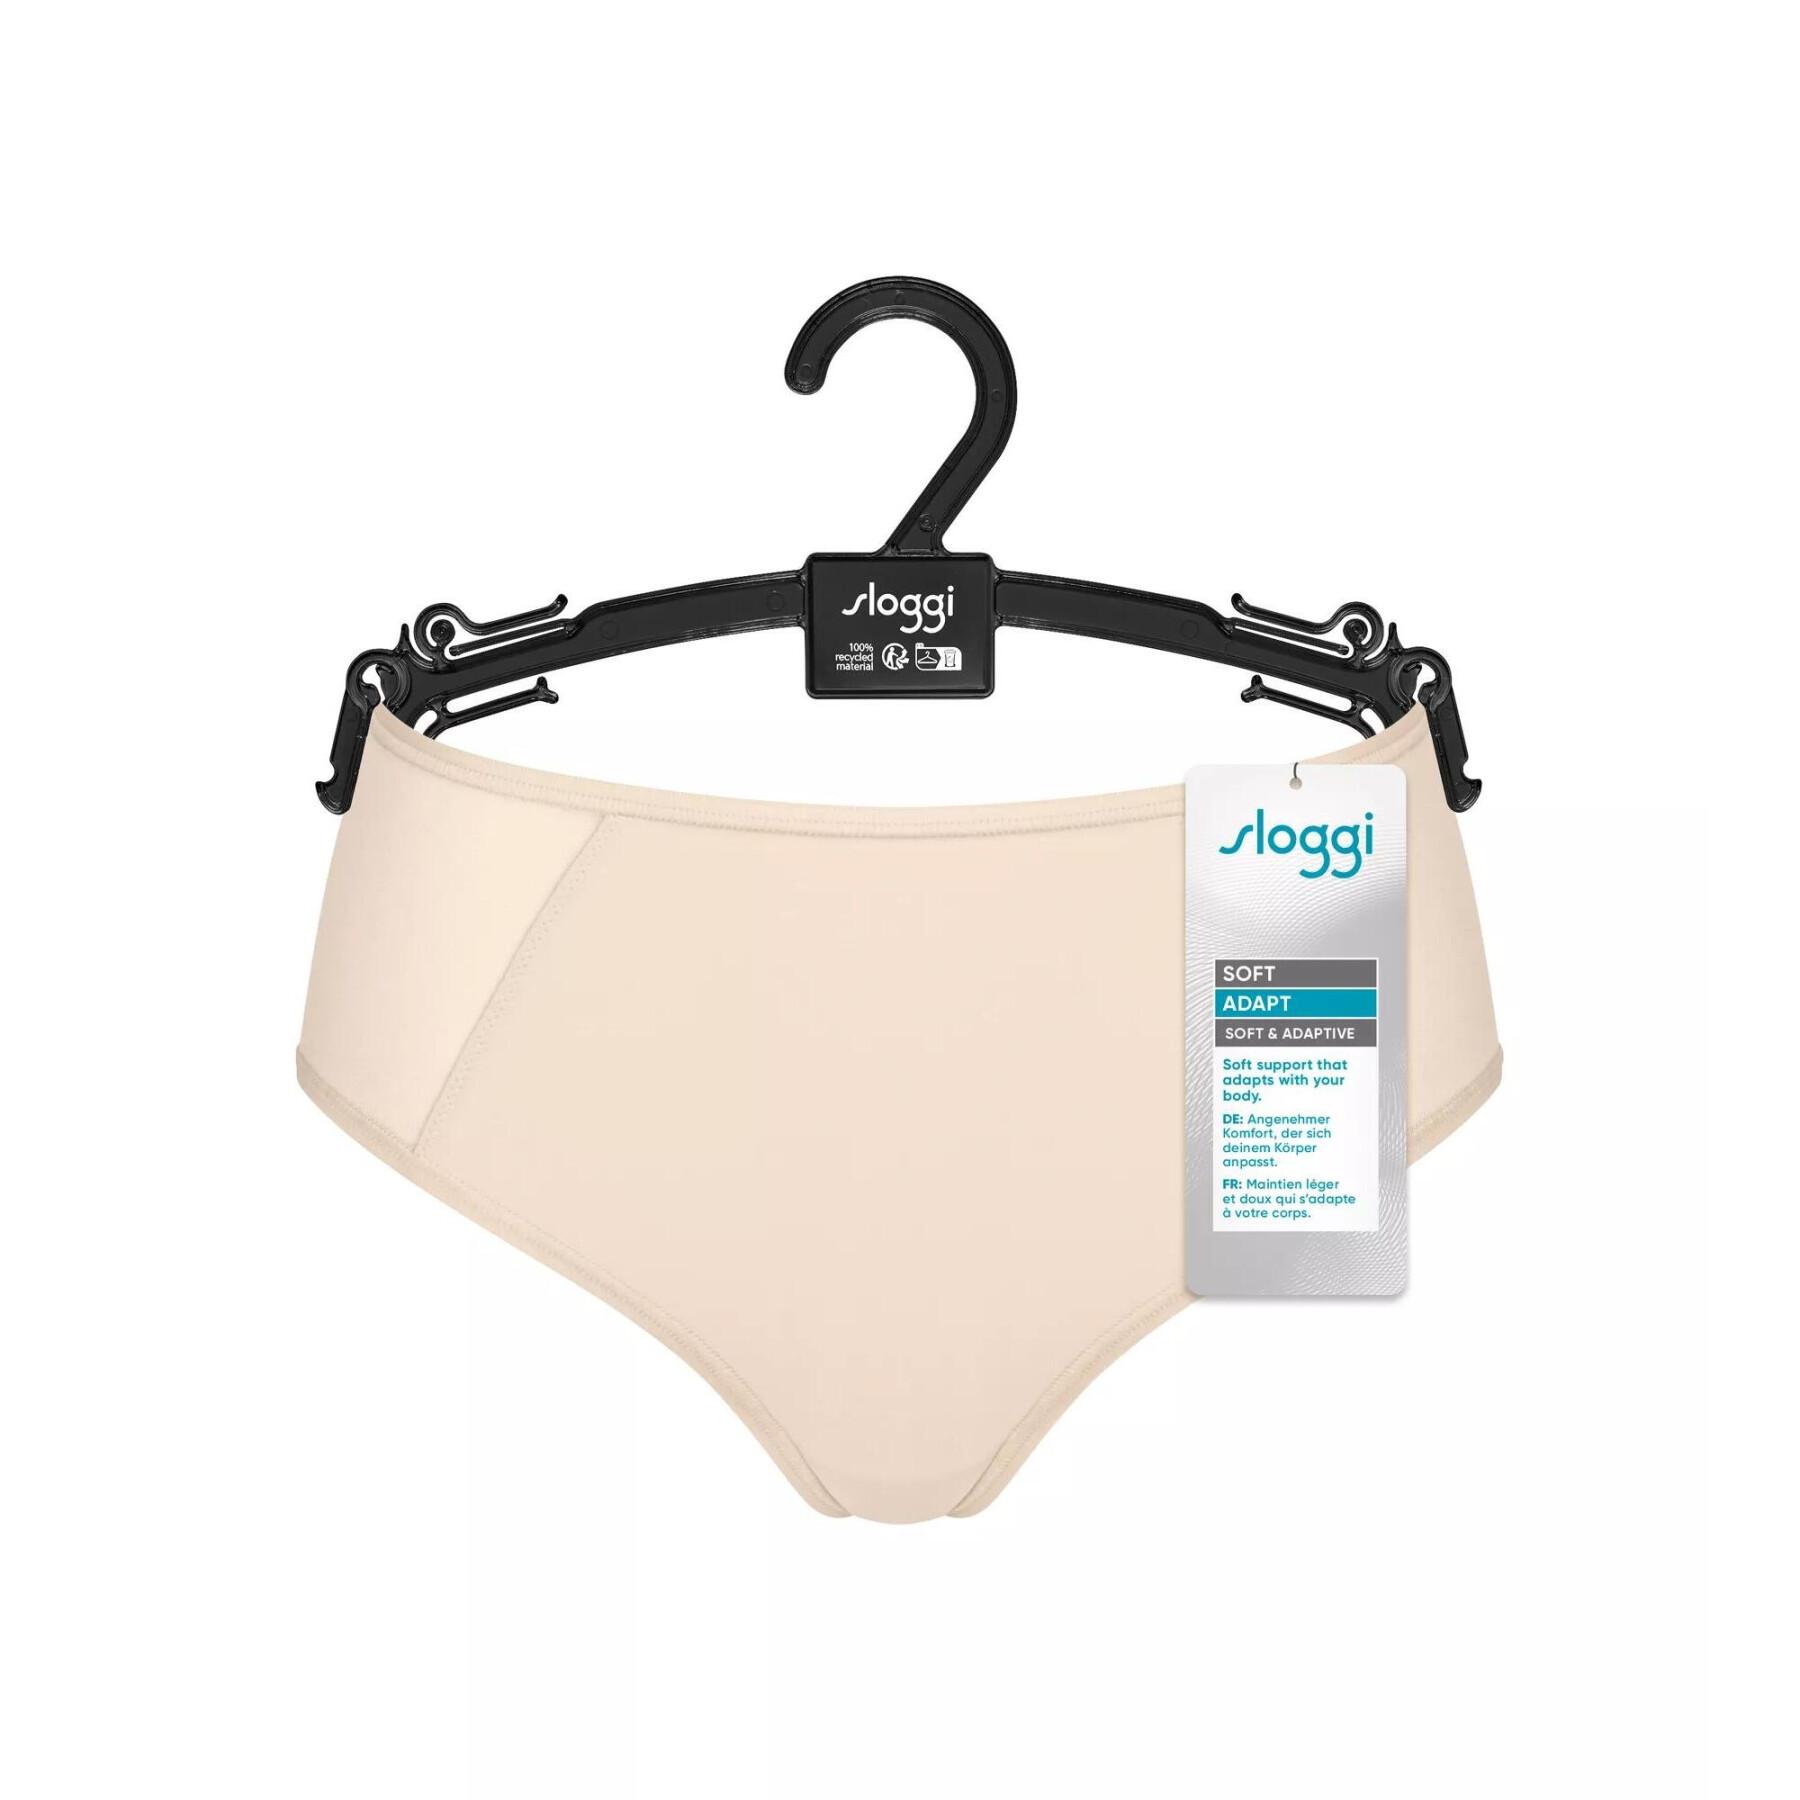 Women's high-waisted panties Sloggi Soft Adapt